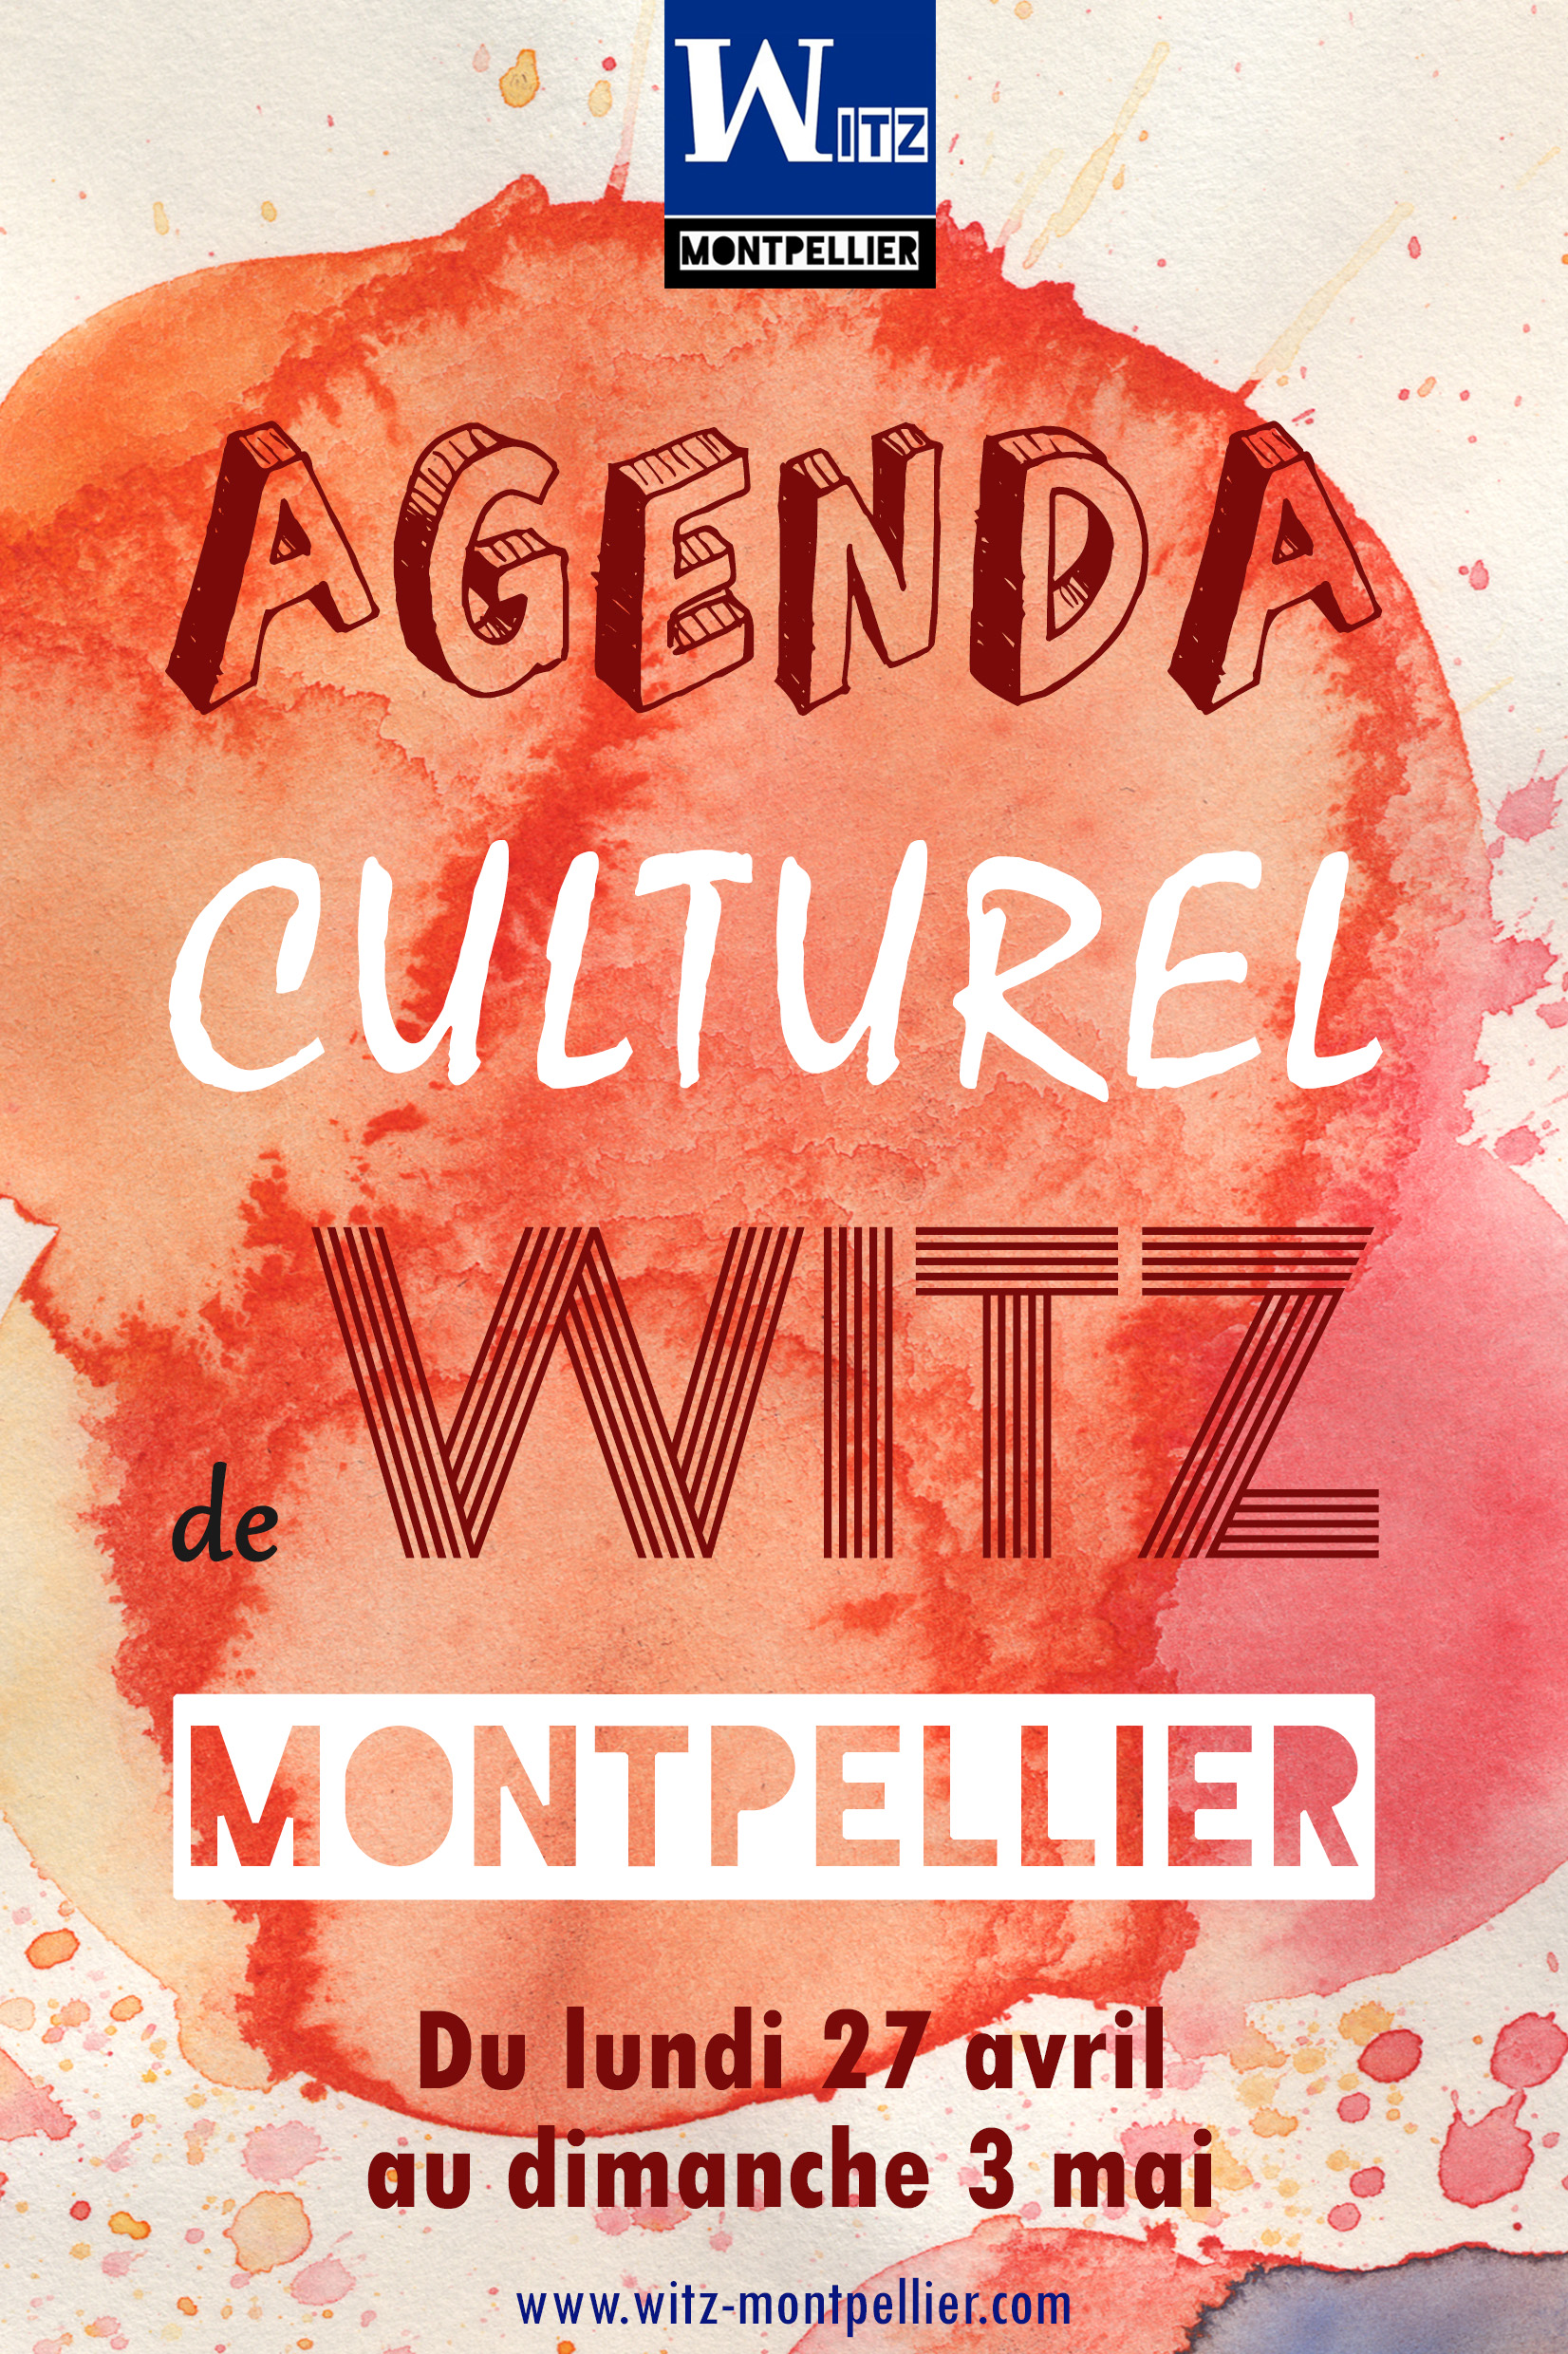 Agenda culturel de Witz Montpellier.jpg